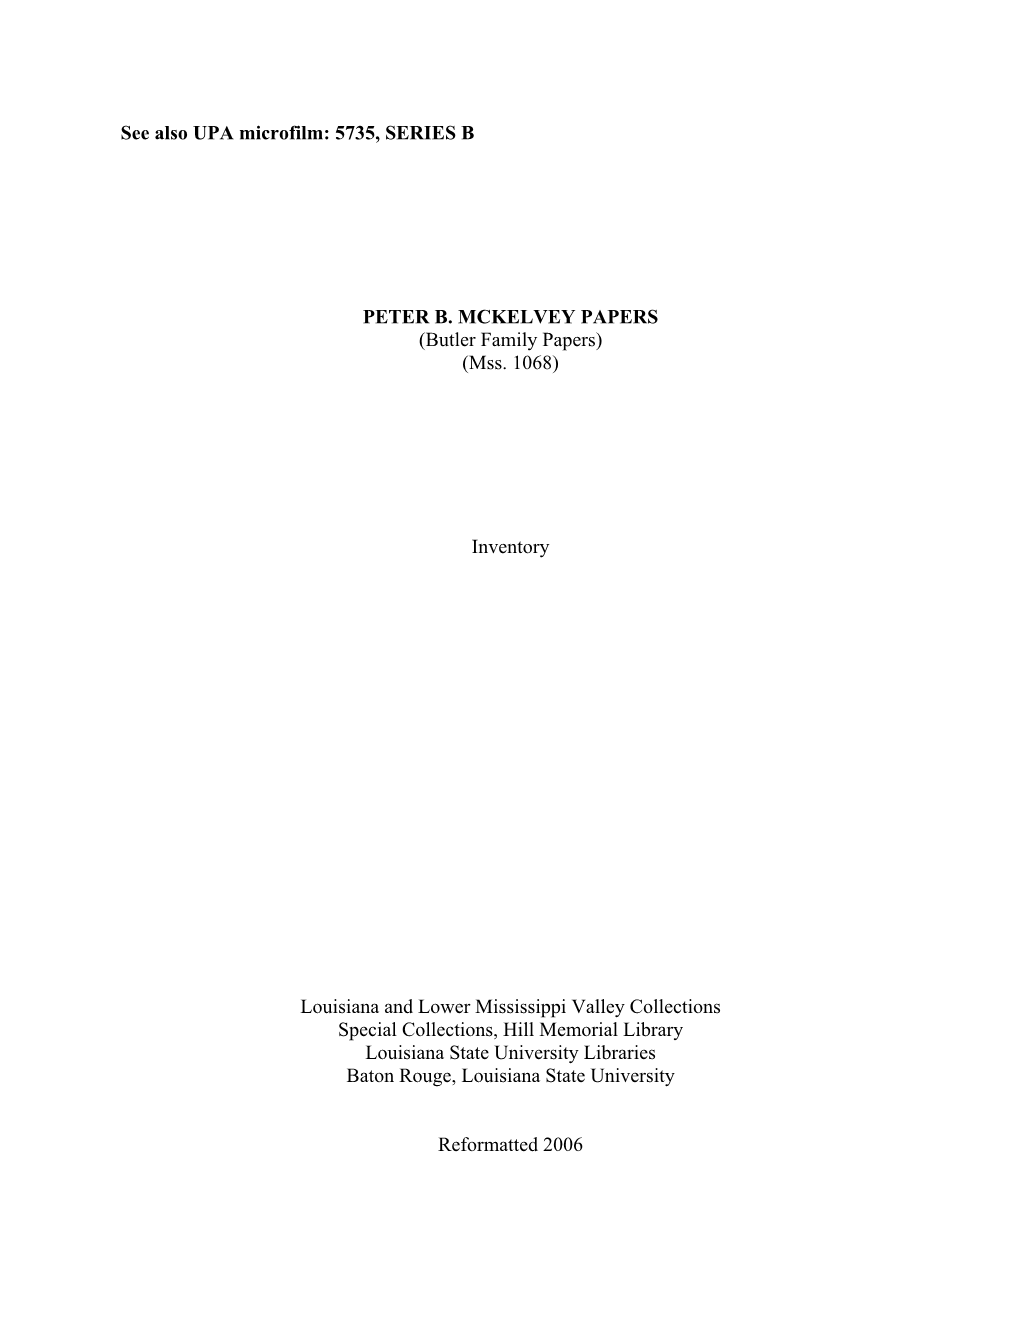 Mckelvey (Peter B.) Papers